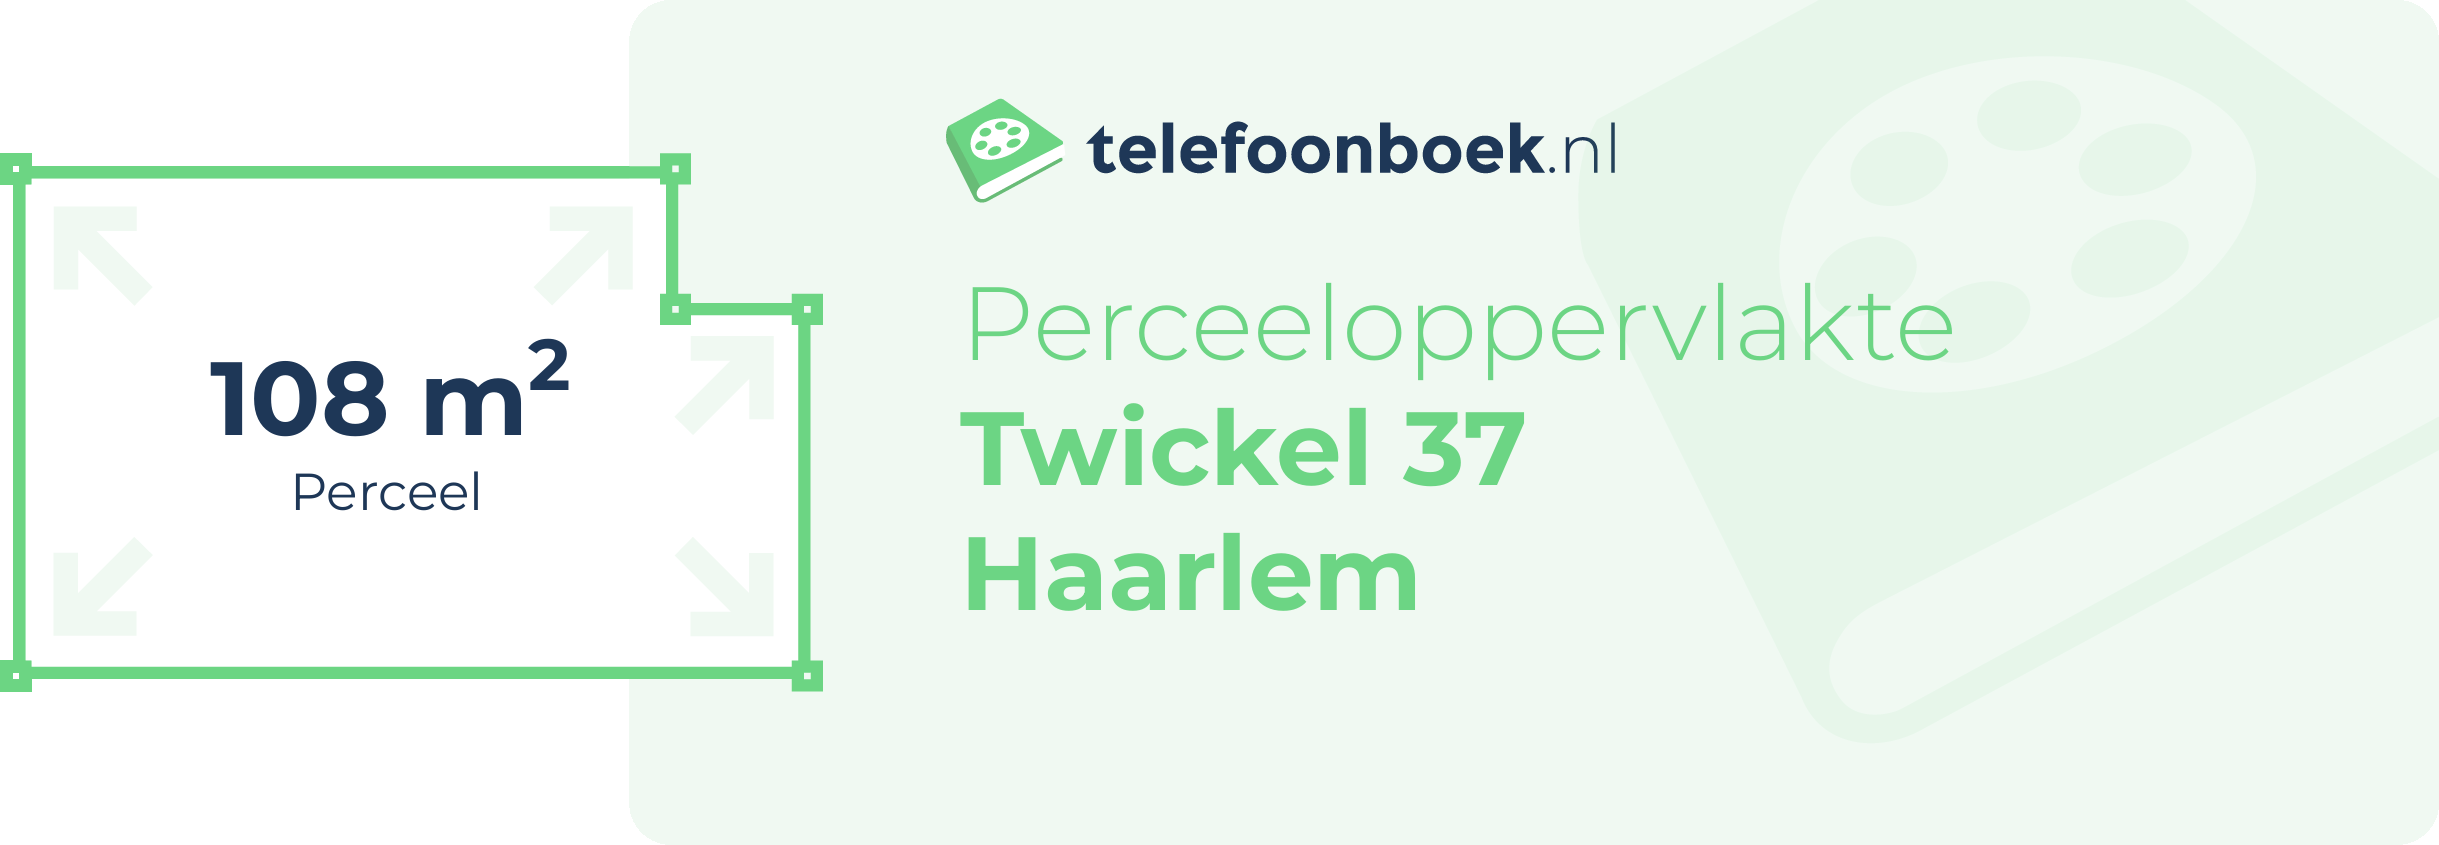 Perceeloppervlakte Twickel 37 Haarlem